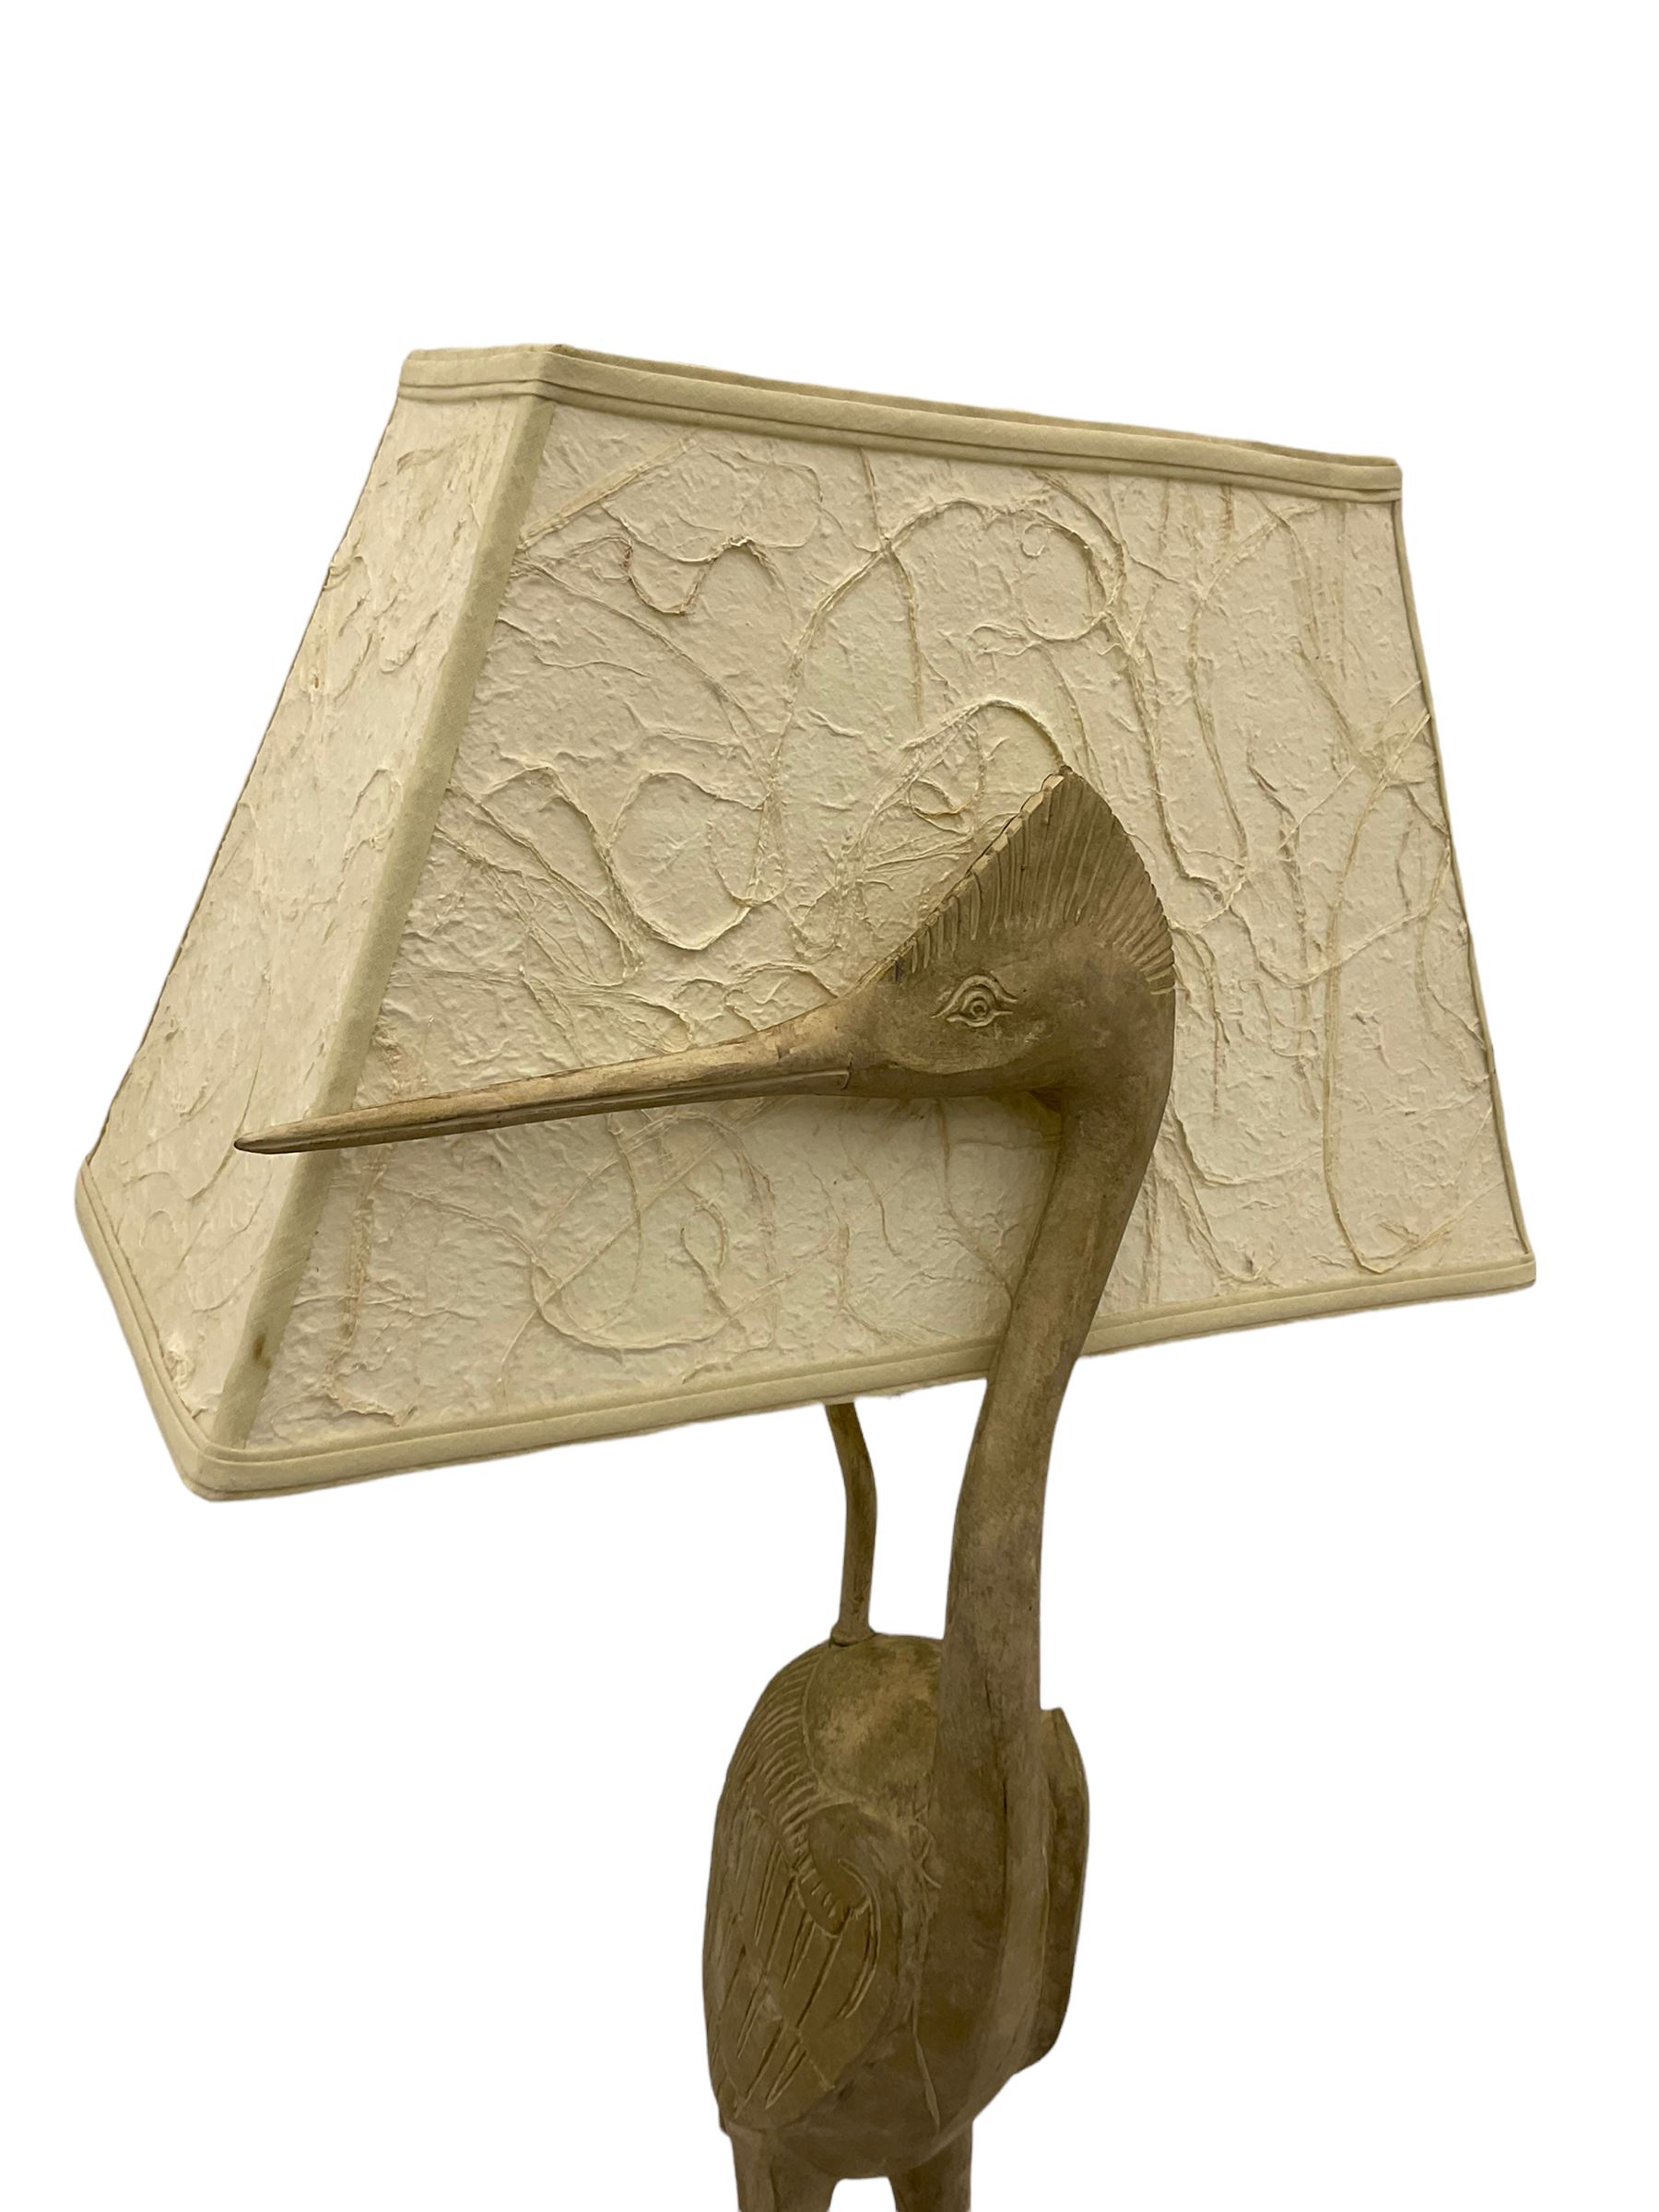 Carved wood standing heron standard lamp - Image 4 of 5